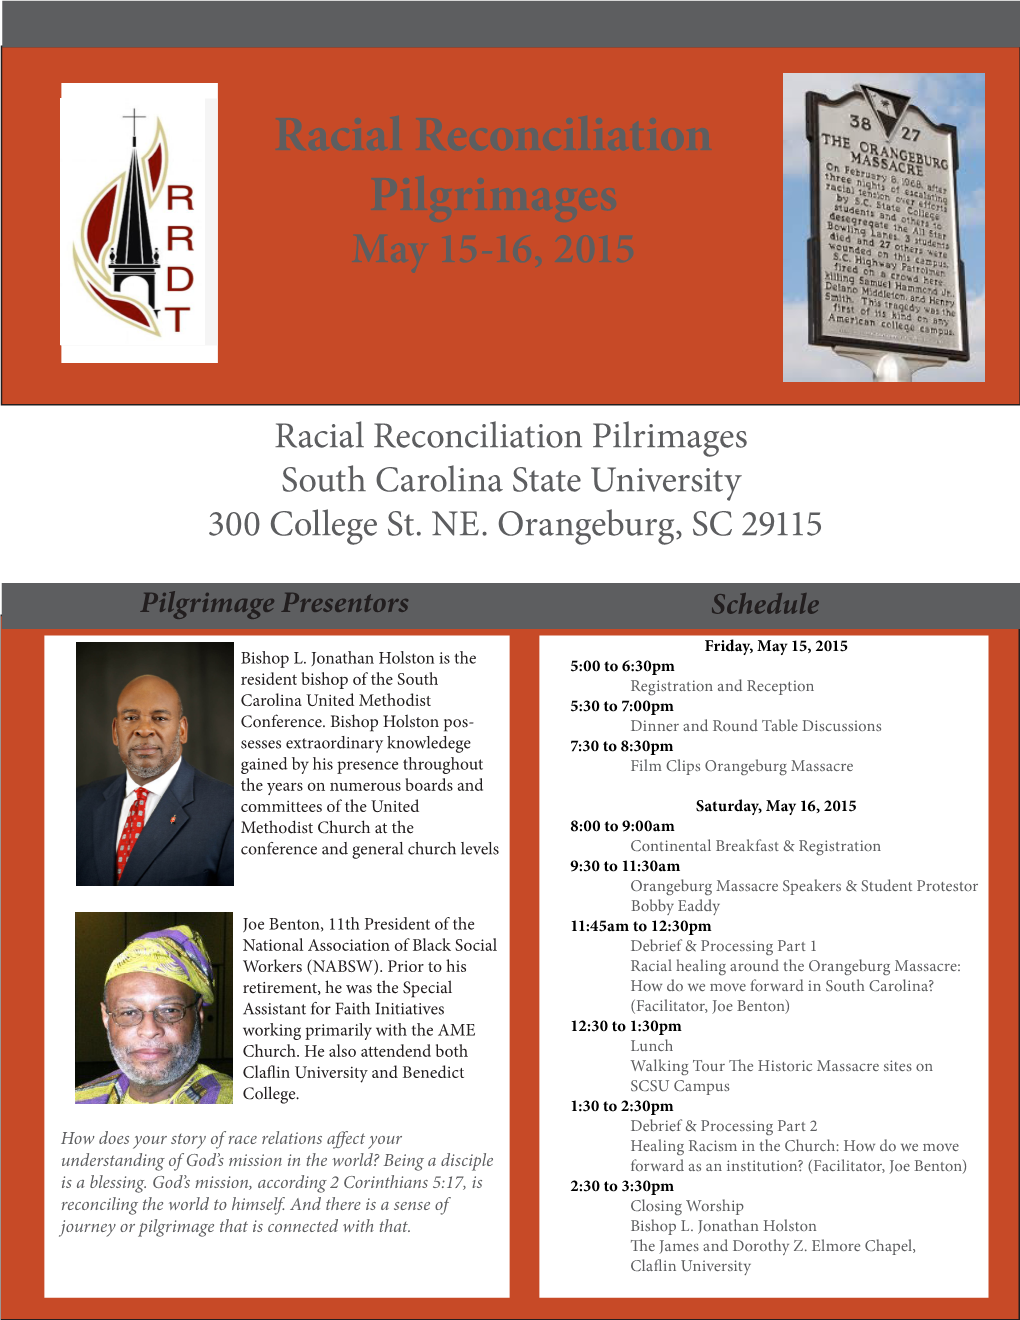 Racial Reconciliation Pilgrimages May 15-16, 2015